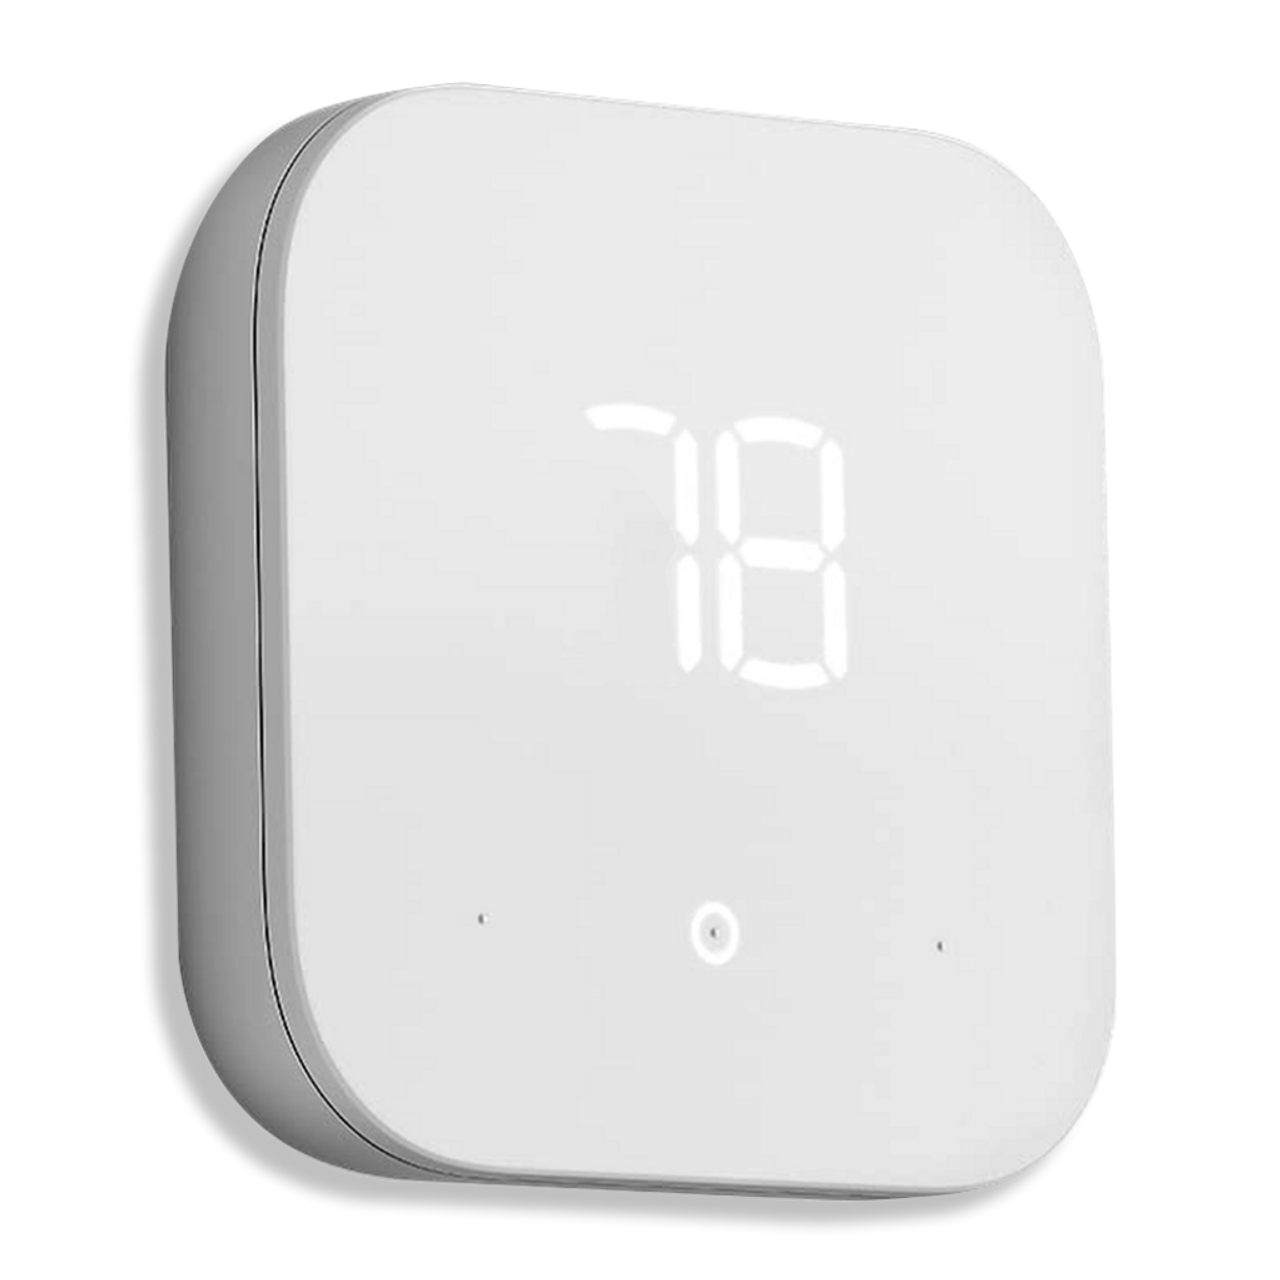 Amazon Smart Thermostat set to 78 degrees with white background